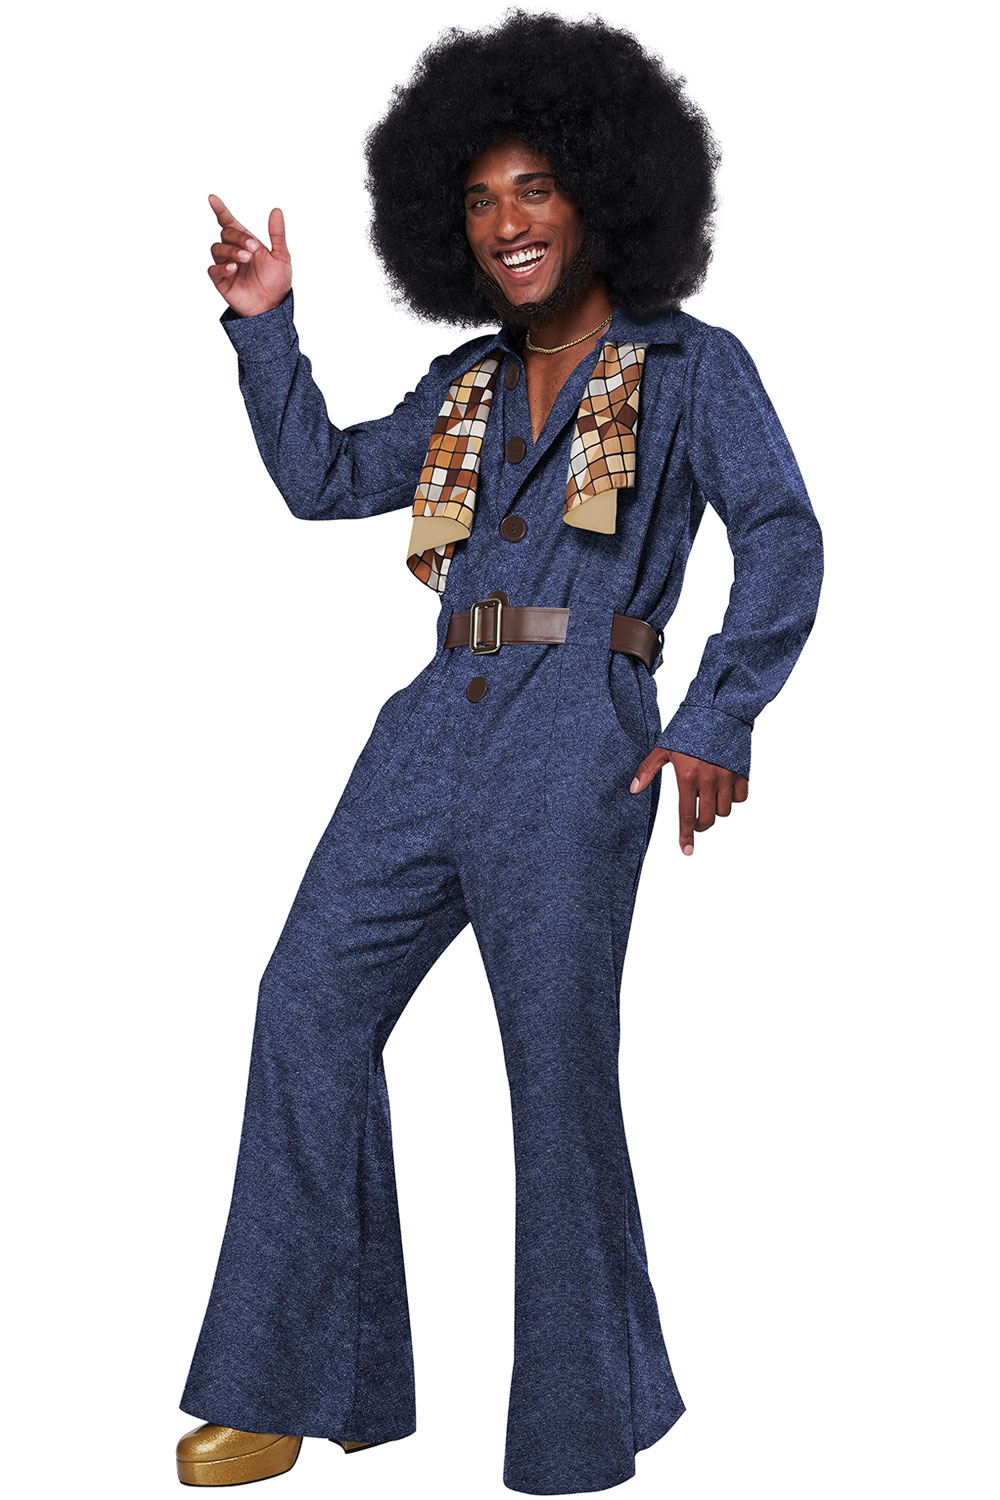 California Costume 70s Denim Jumpsuit Adult Men Disco Halloween outfit  5120/080 | eBay